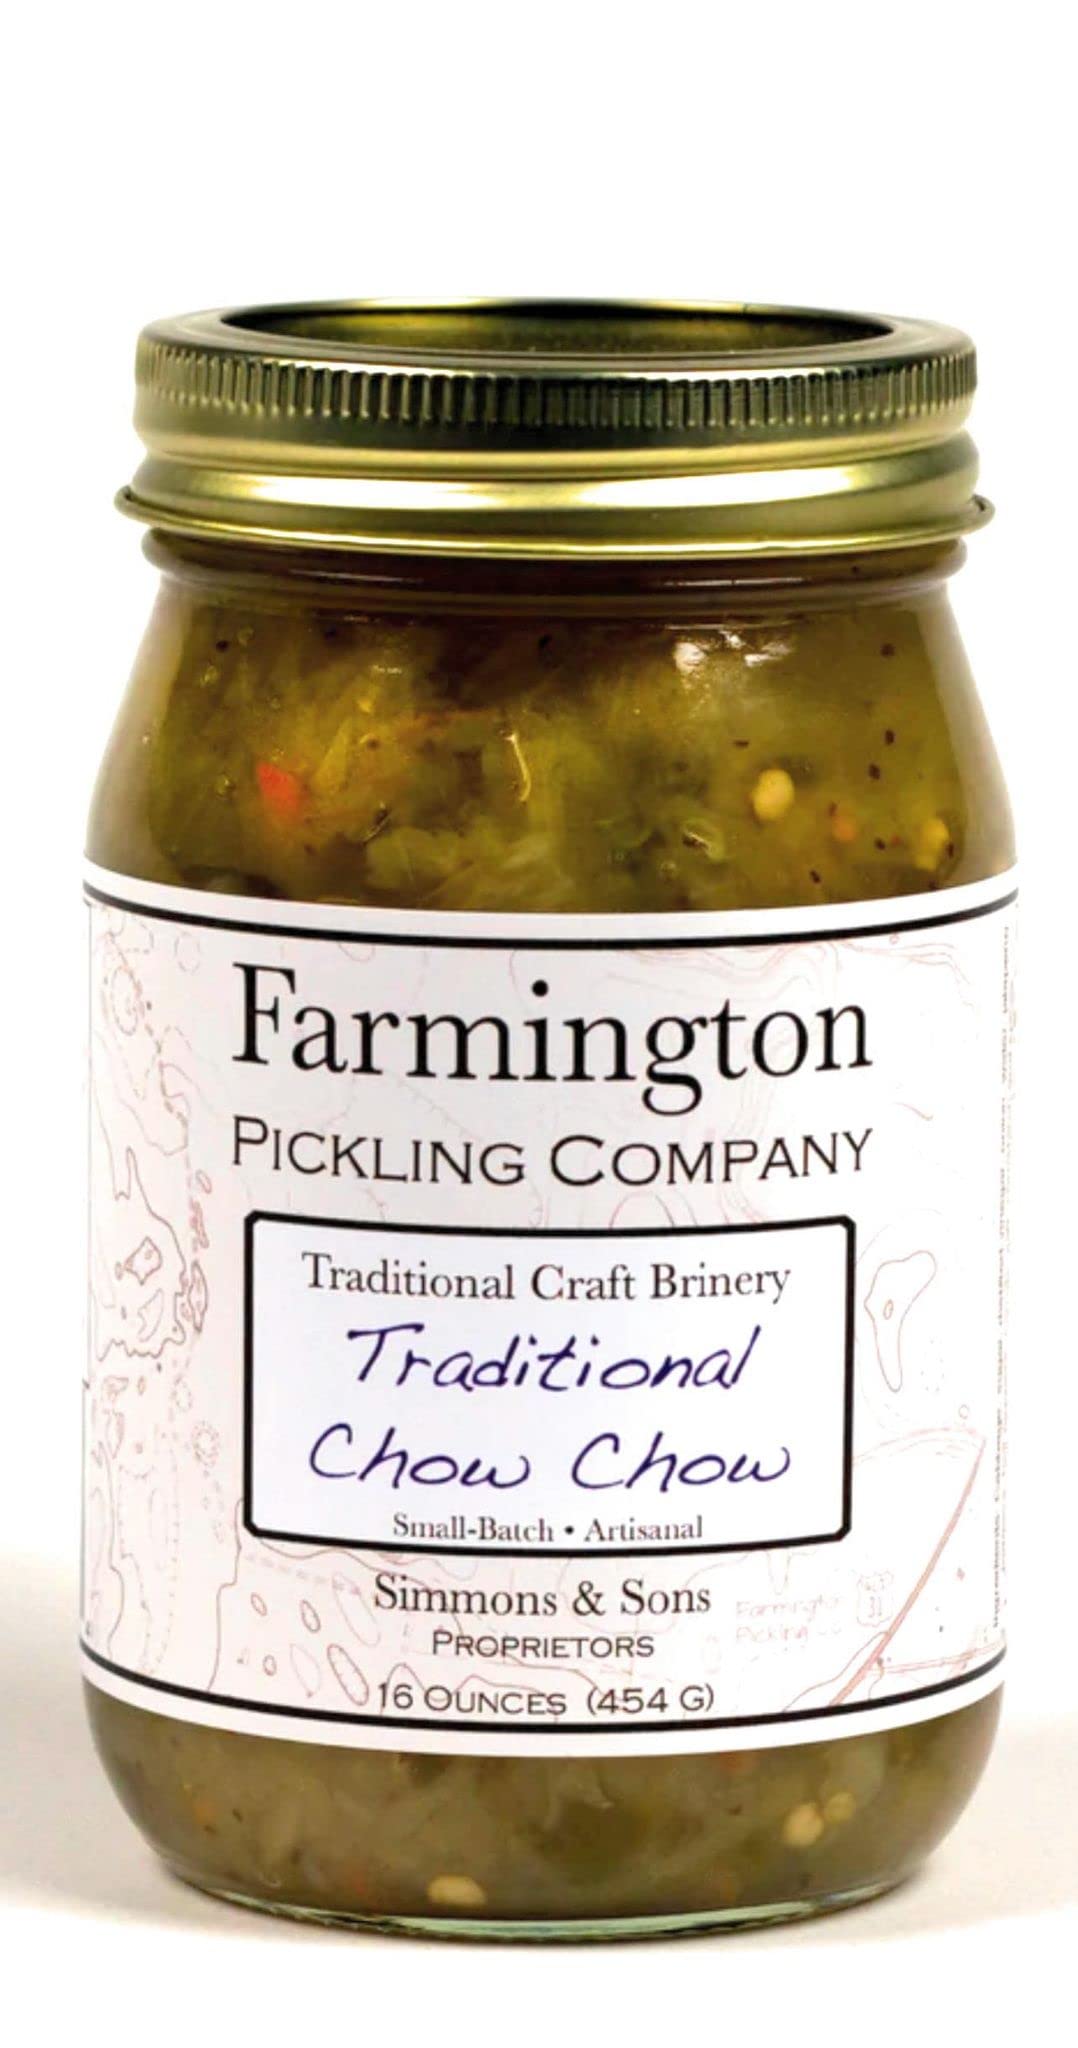 Farmington Pickling Company Chow Chow